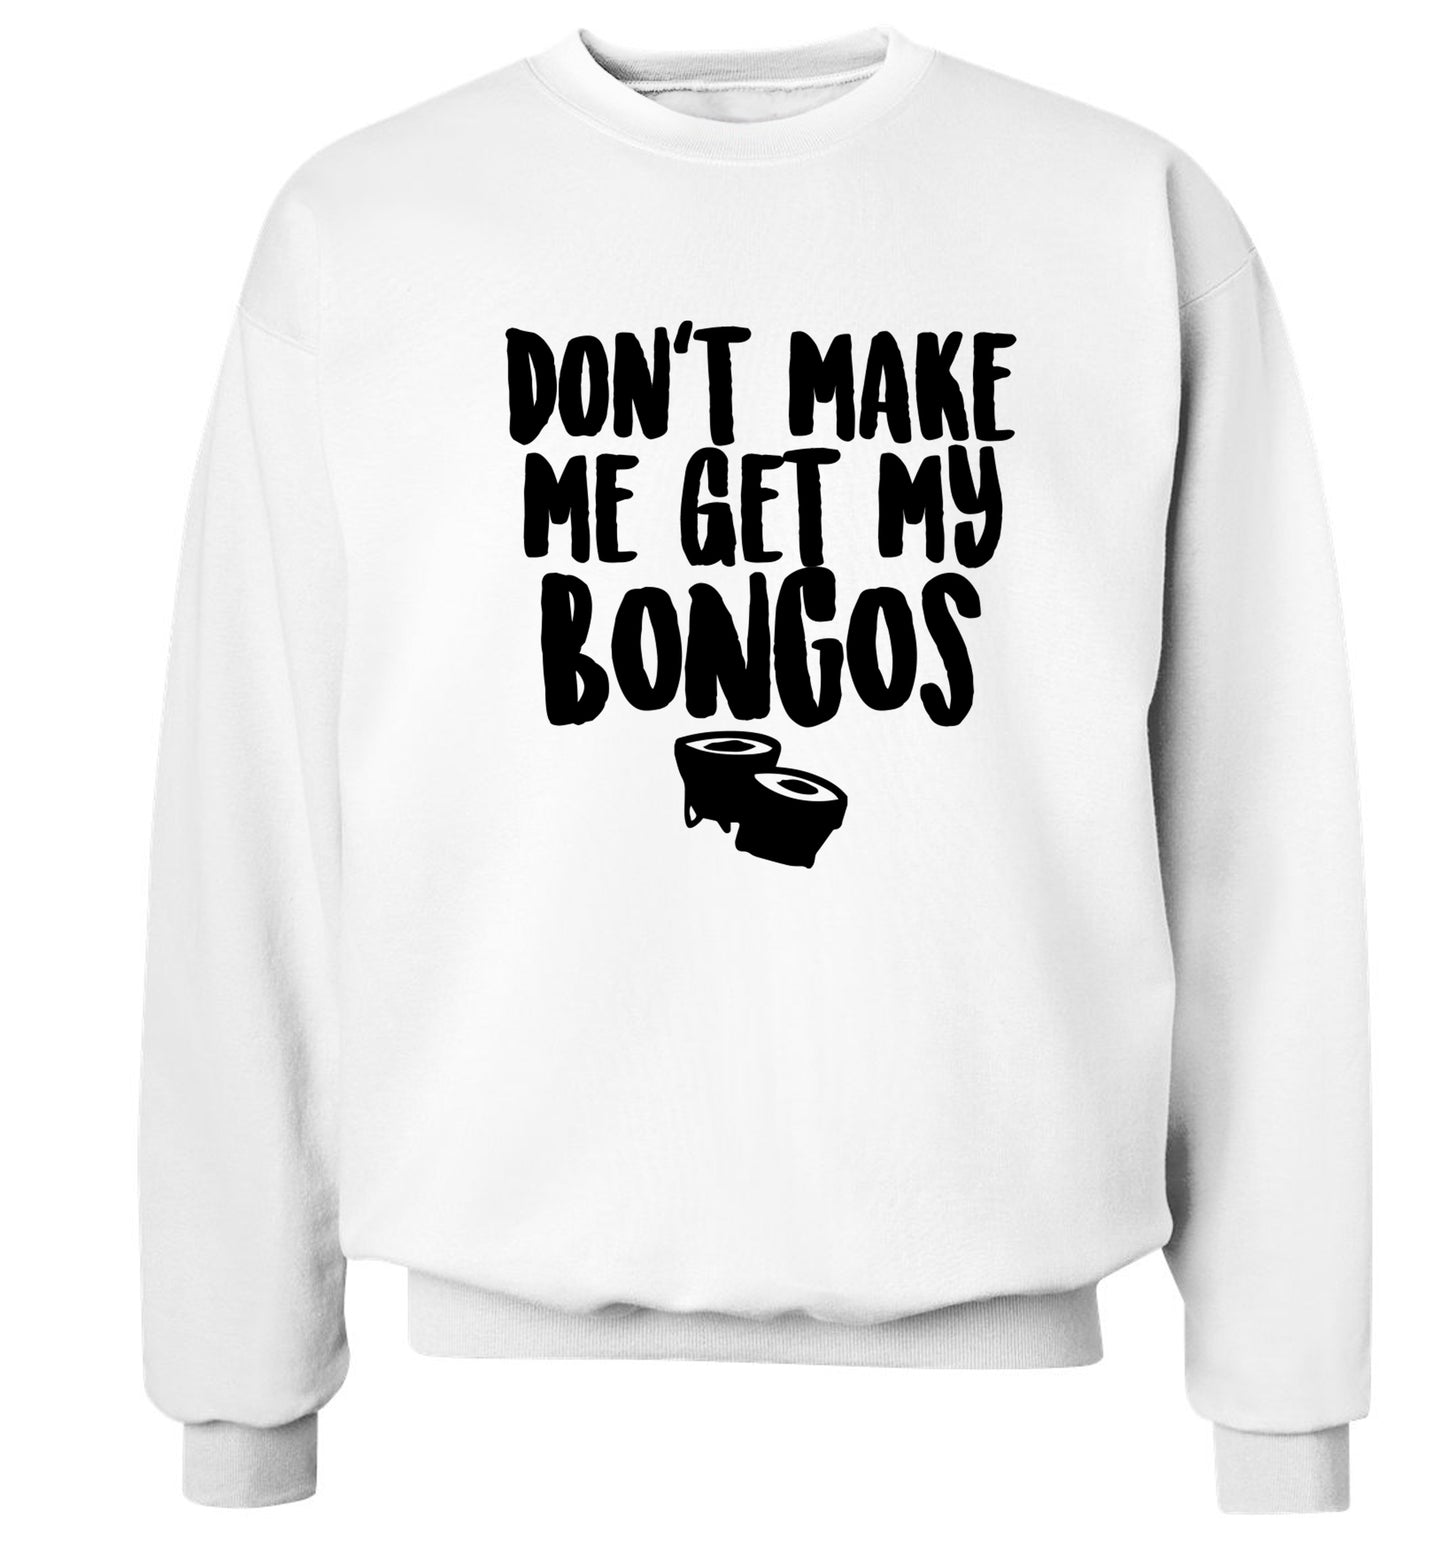 Don't make me get my bongos Adult's unisex white Sweater 2XL